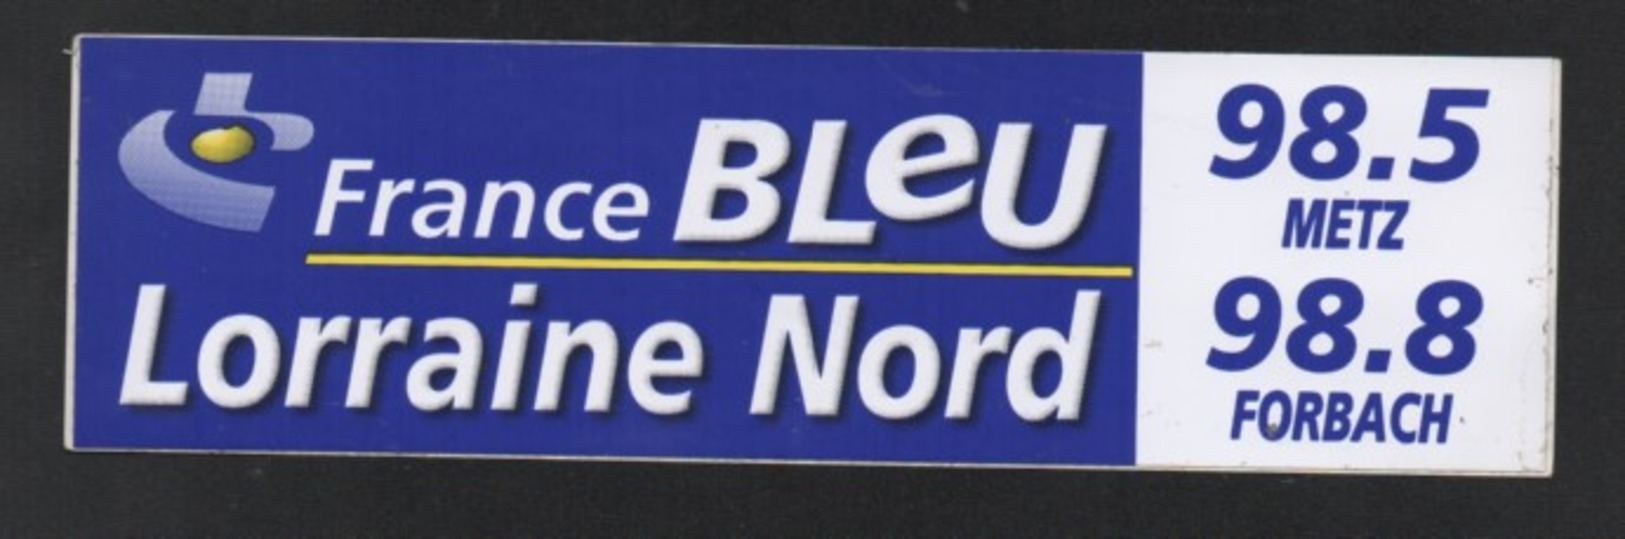 RADIO FRANCE BLEU LORRAINE NORD FM METZ FORBACH -  AUTOCOLLANT  N°856 - Stickers